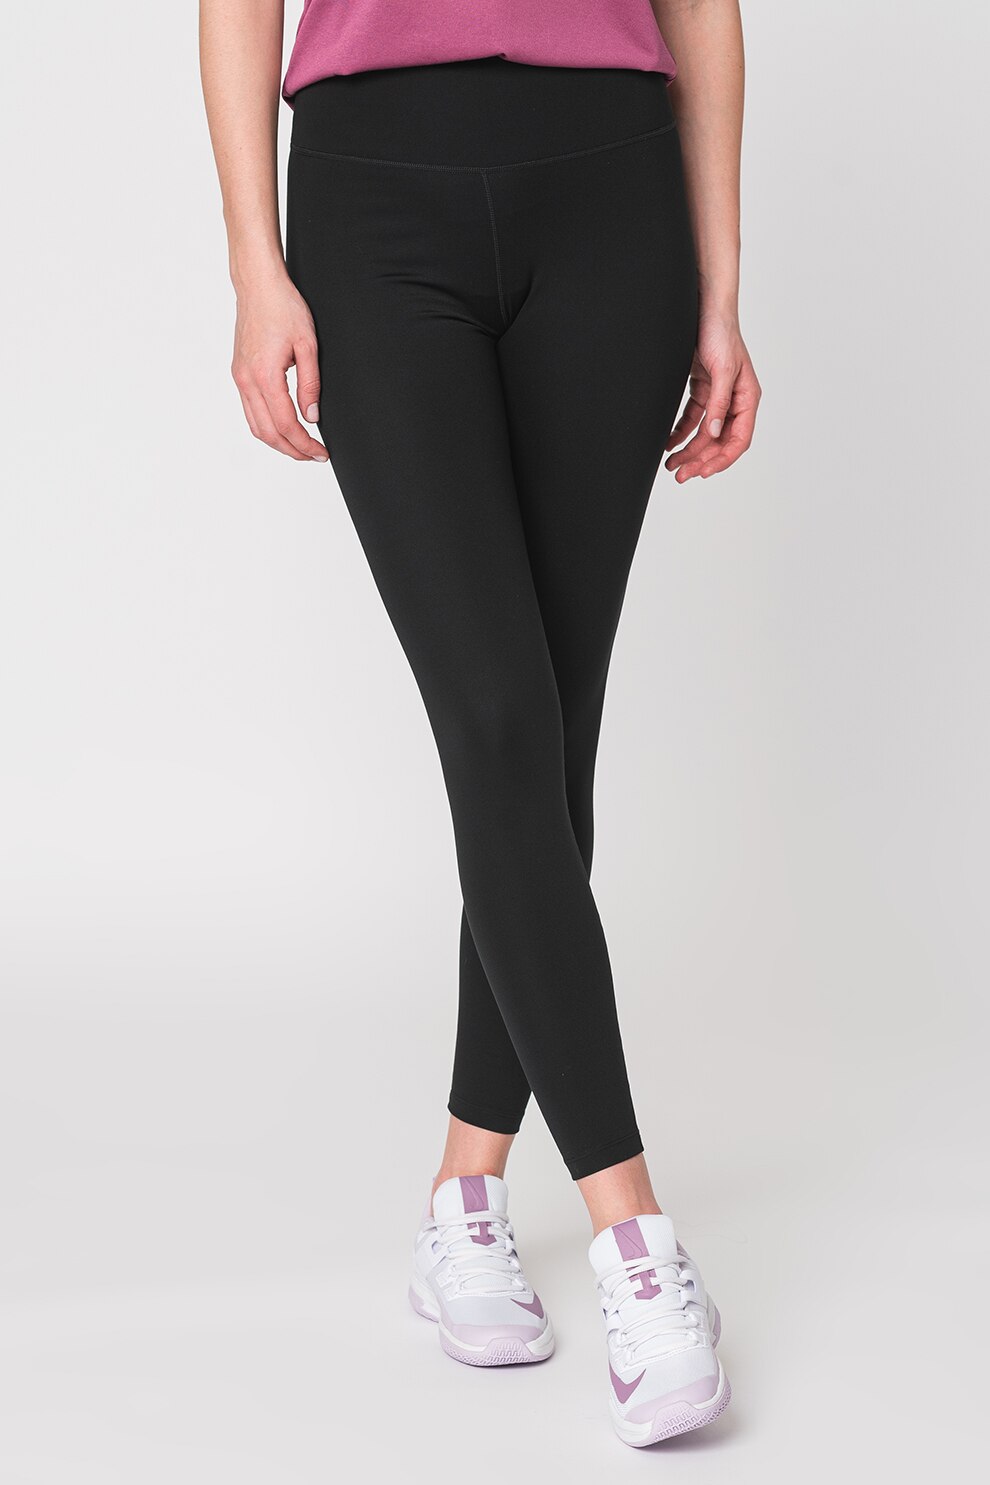 Nike One középmagas derekú, 3/4-es női leggings